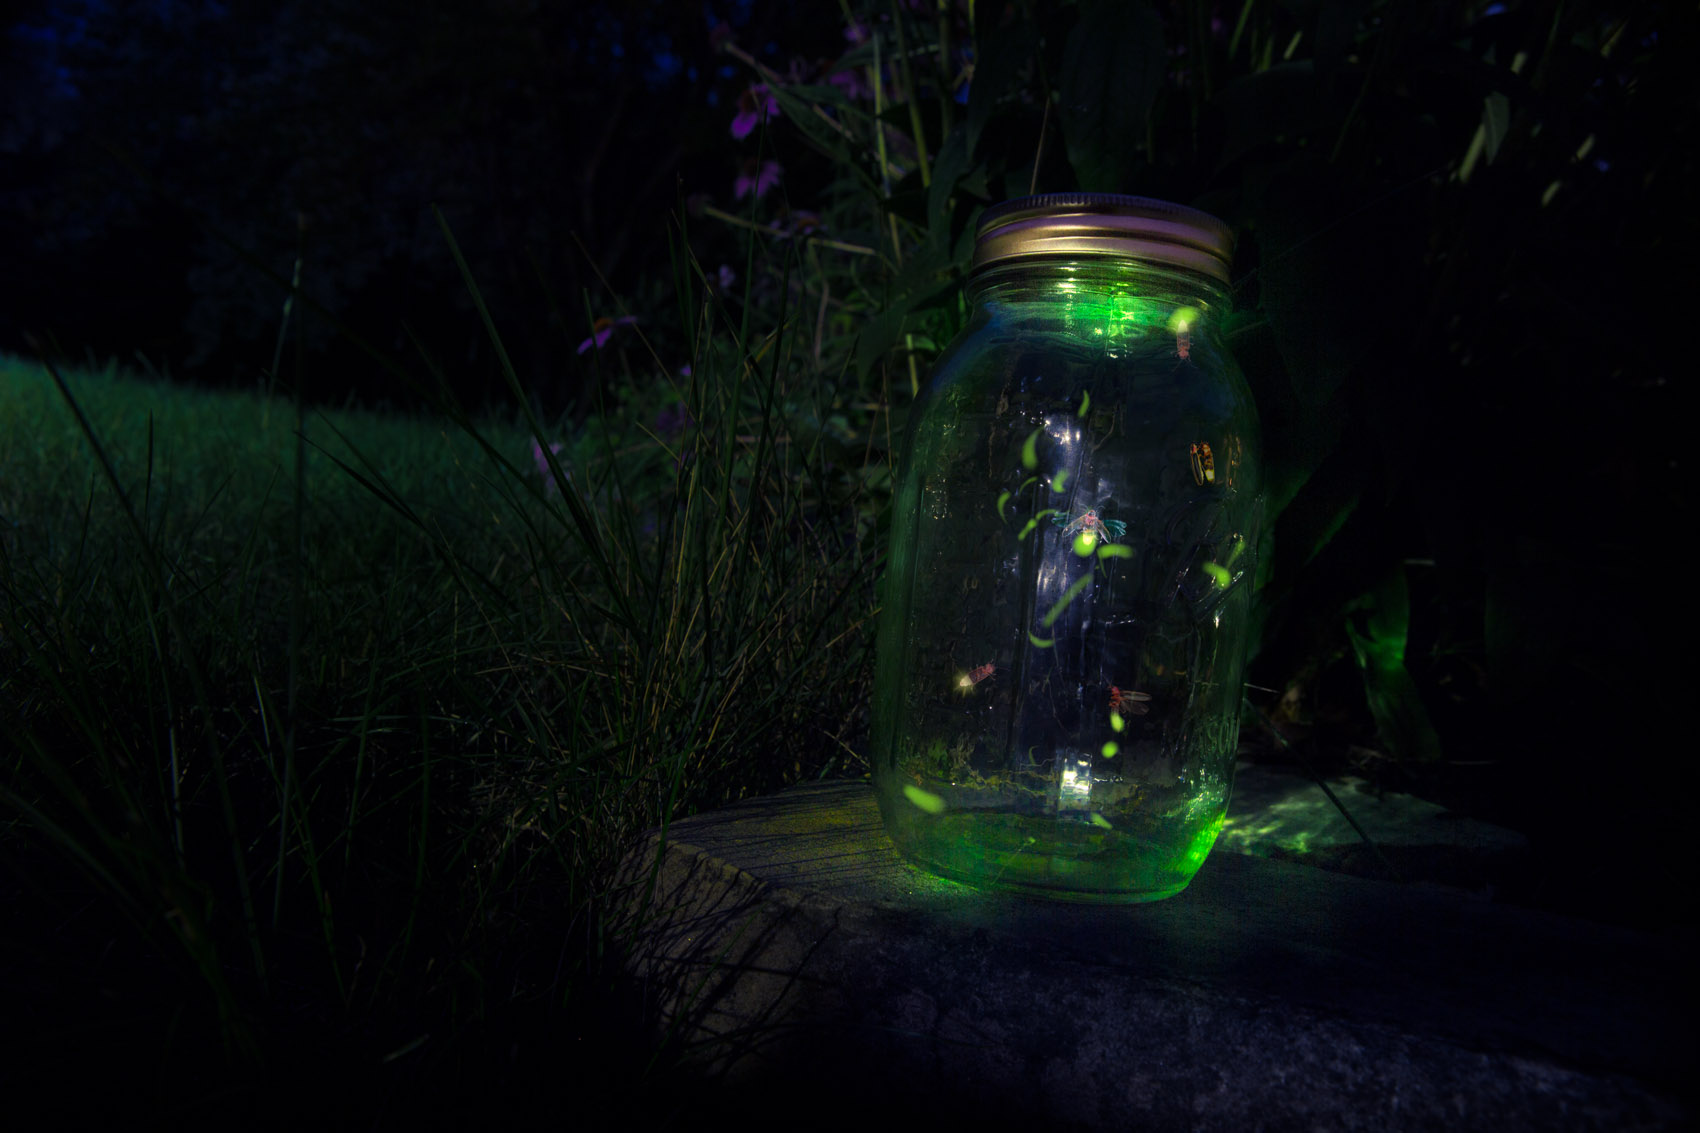 A jar of fireflies glows green in a dark forest.